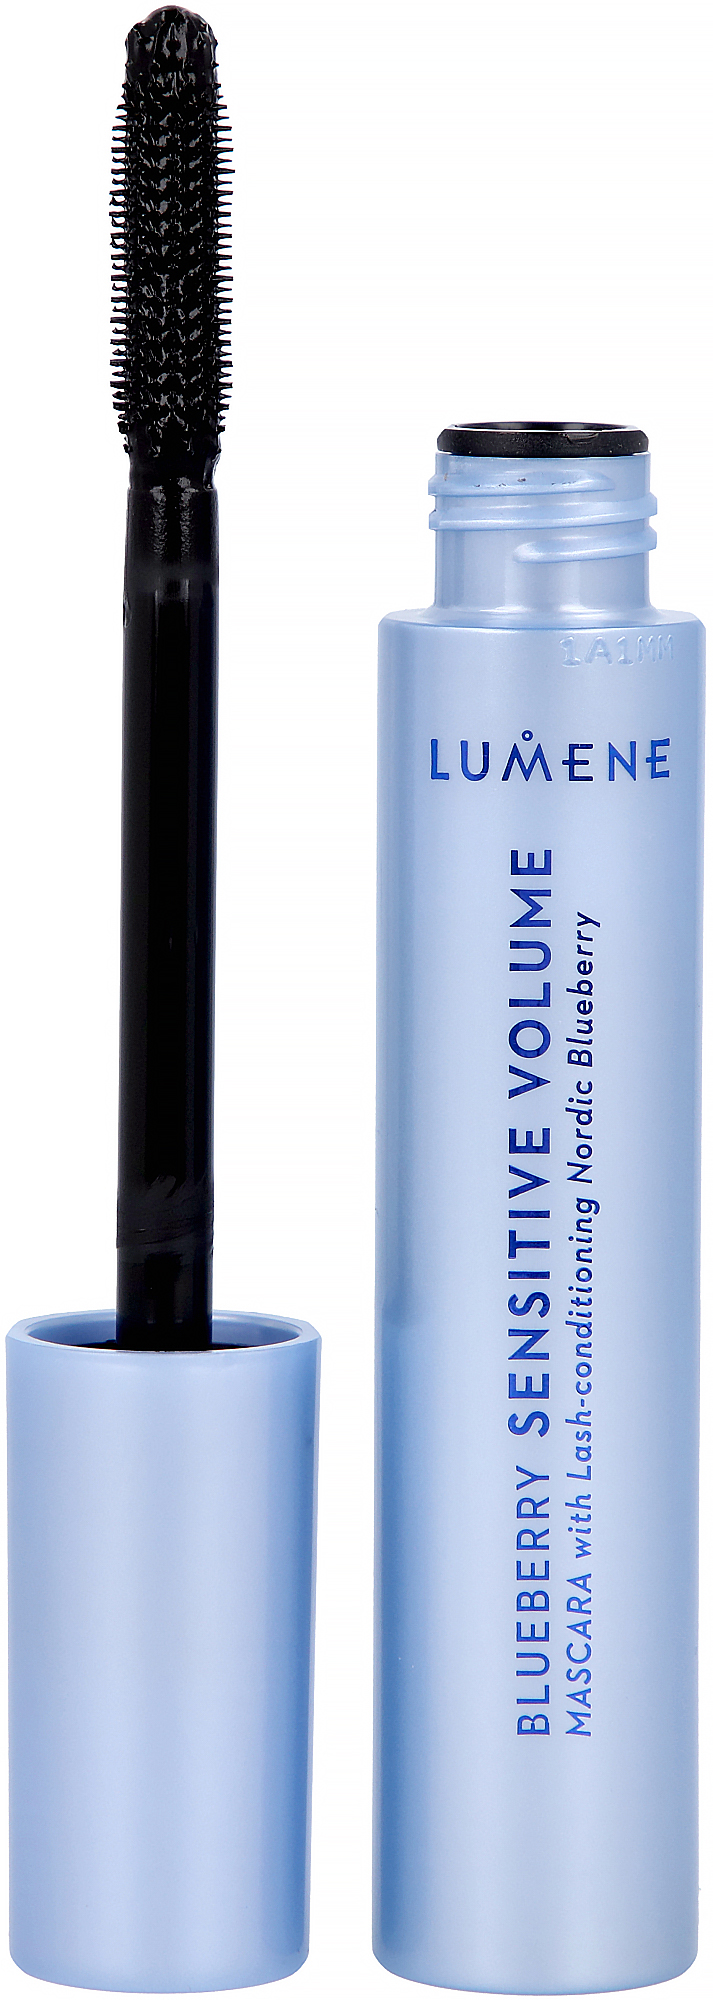 symptom kom over Fristelse Lumene Blueberry Sensitive Volume Mascara Black | lyko.com